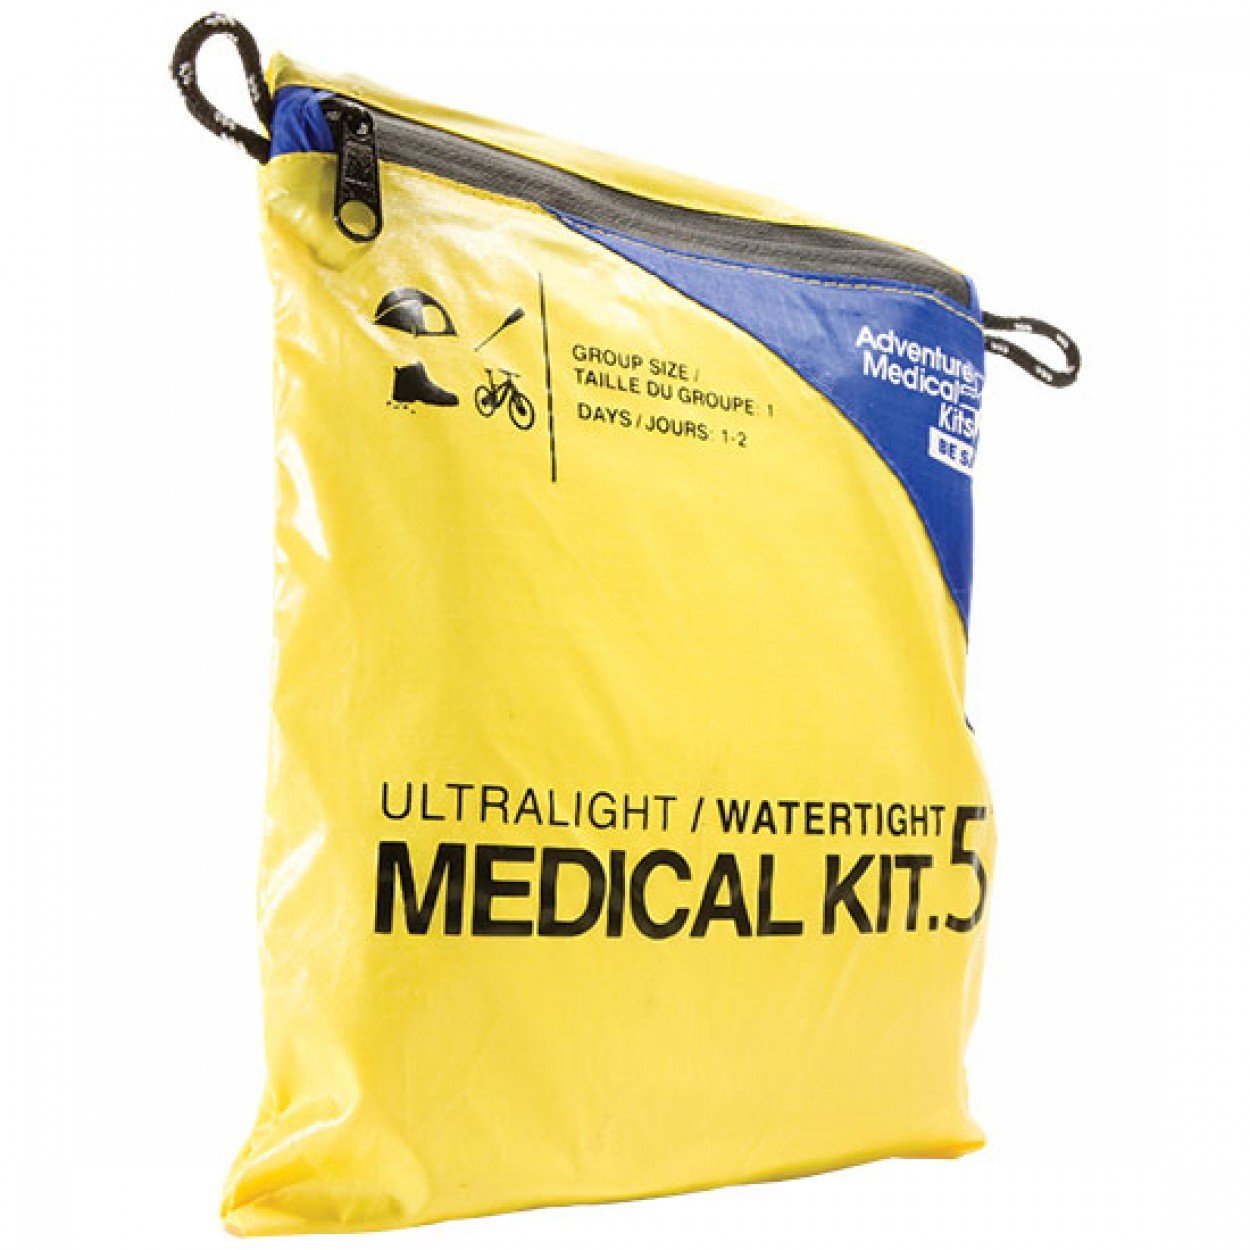 Adventure Medical Kits Adventure Medical Kit Ultralight/Watertight .5 First Aid